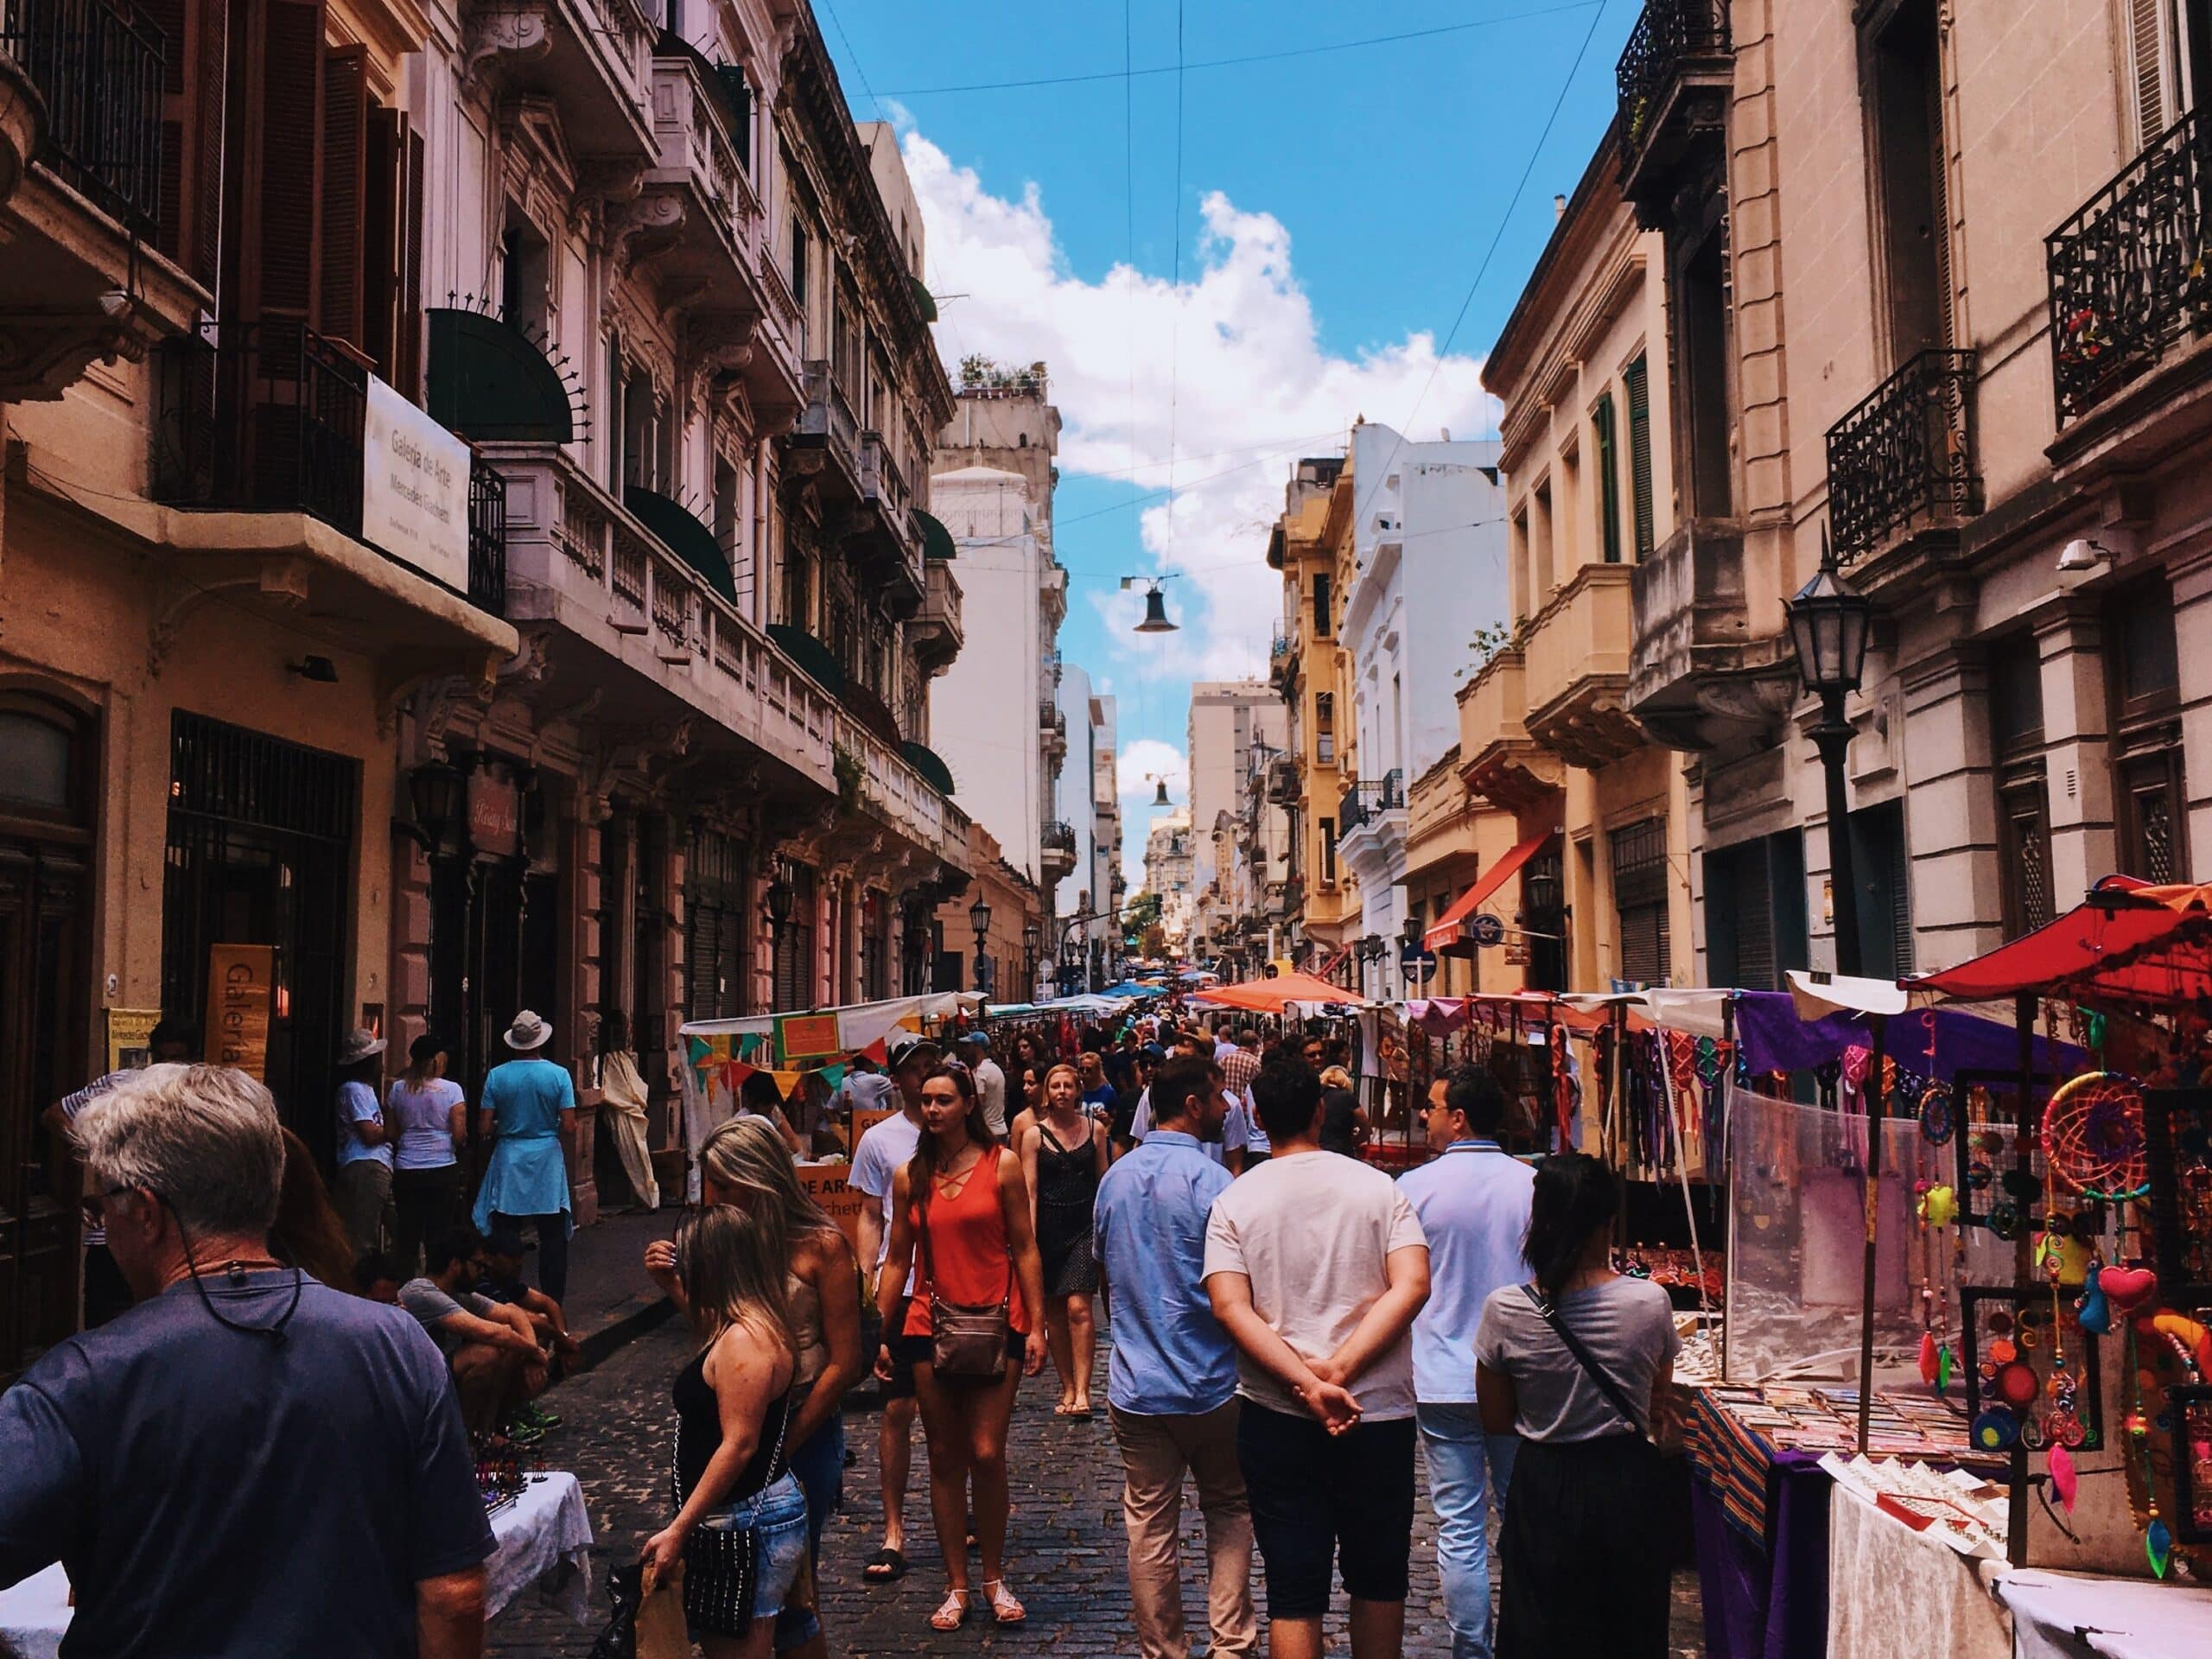 street market in narrow city alley